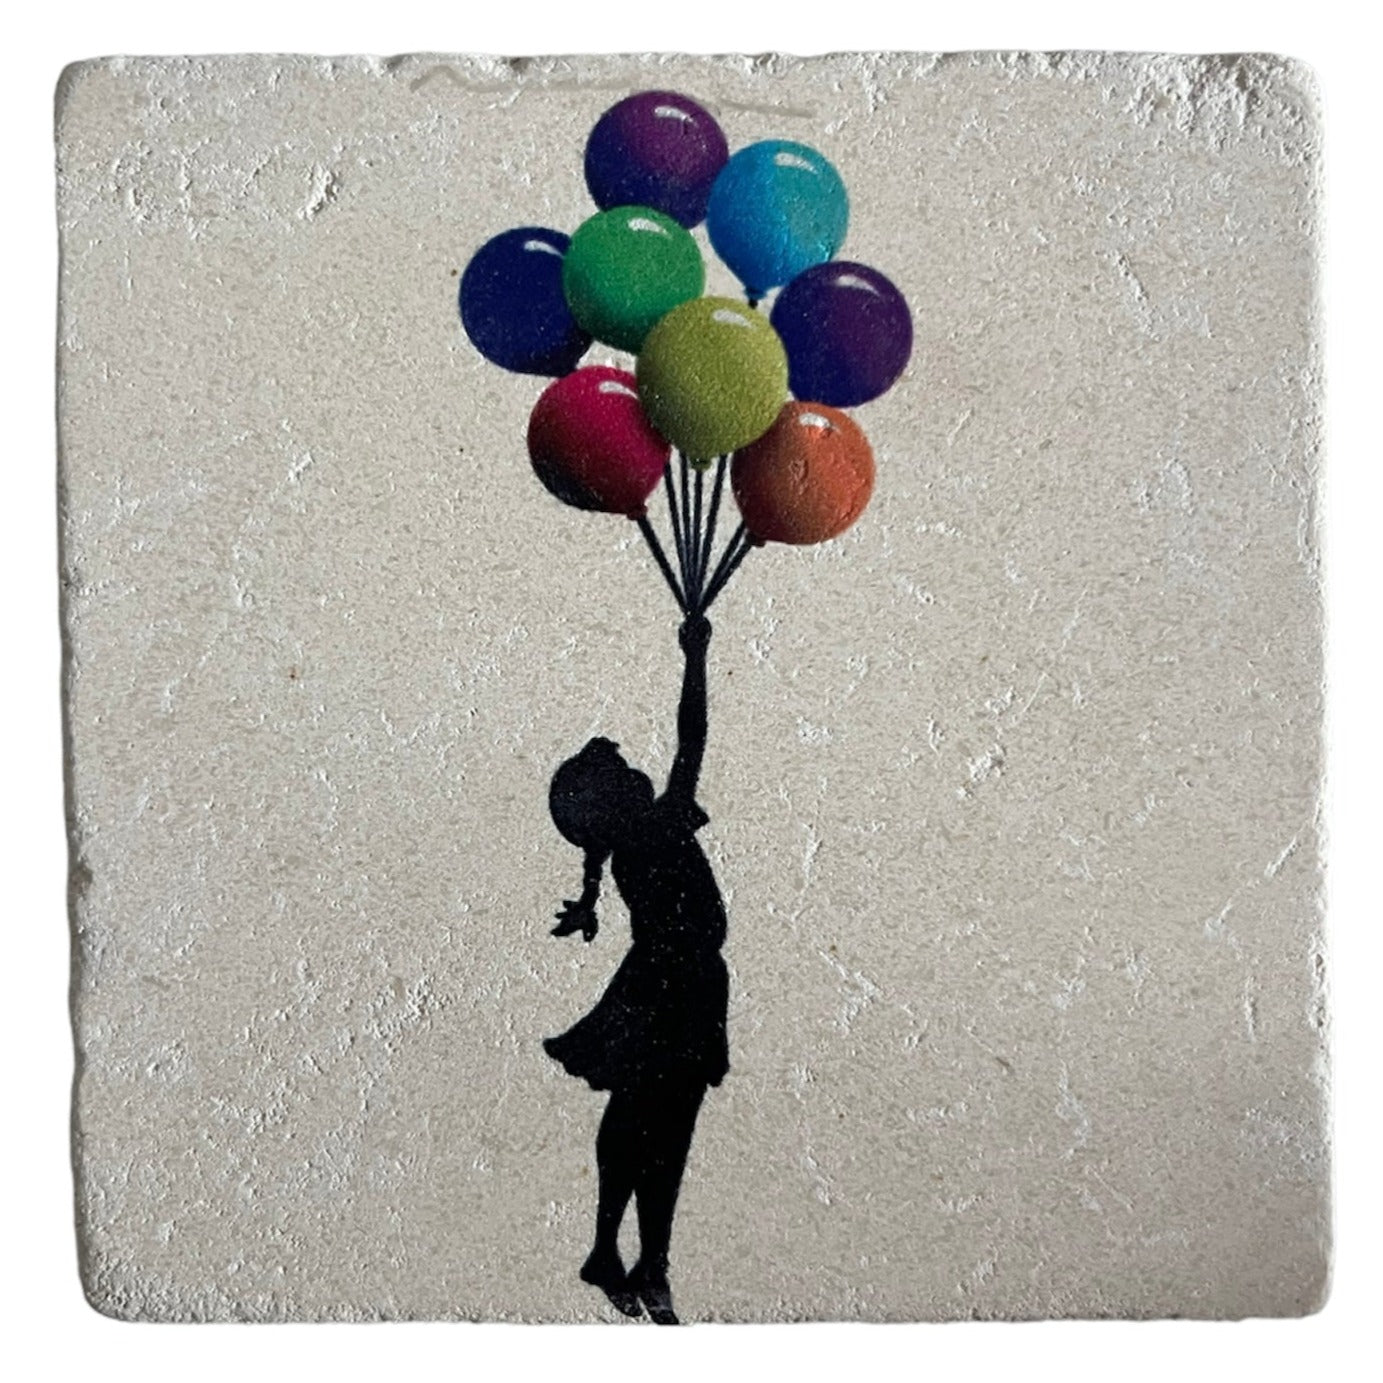 BANKSY *Flying Balloon Girl* Serigrafía sobre piedra Edición Limitada